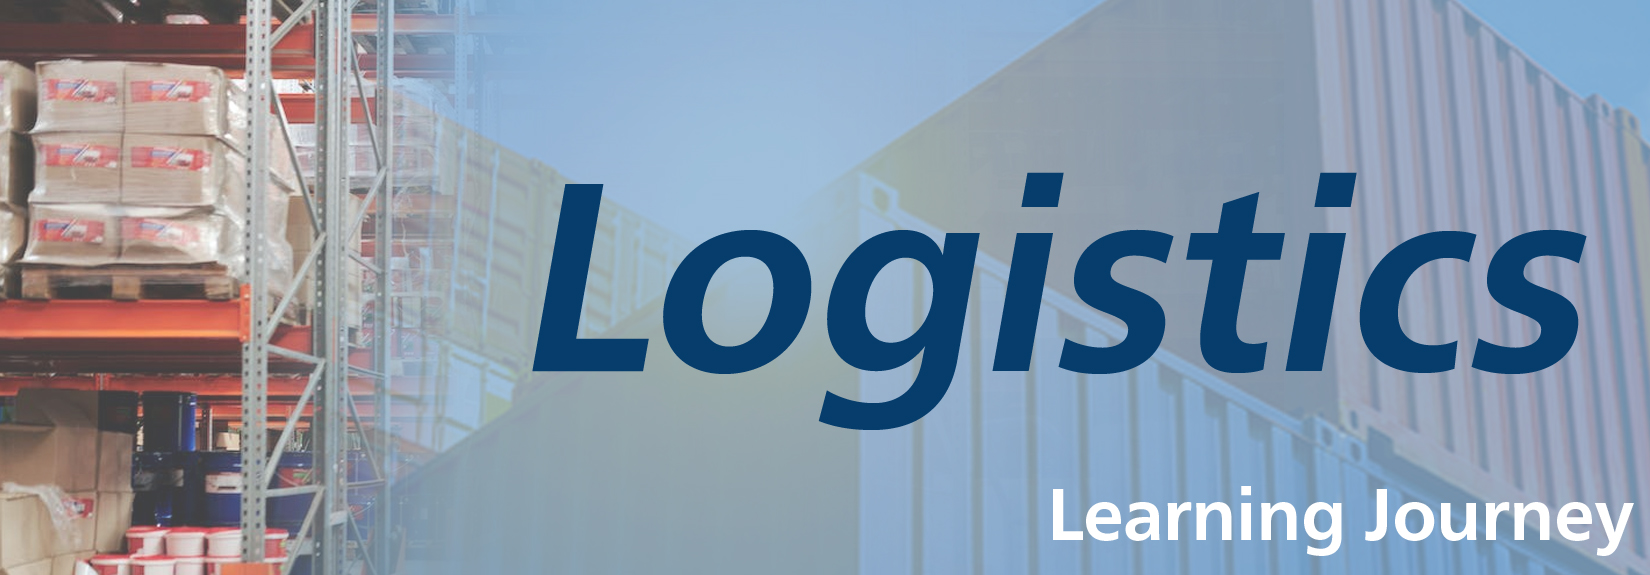 Logistics Learning Journey